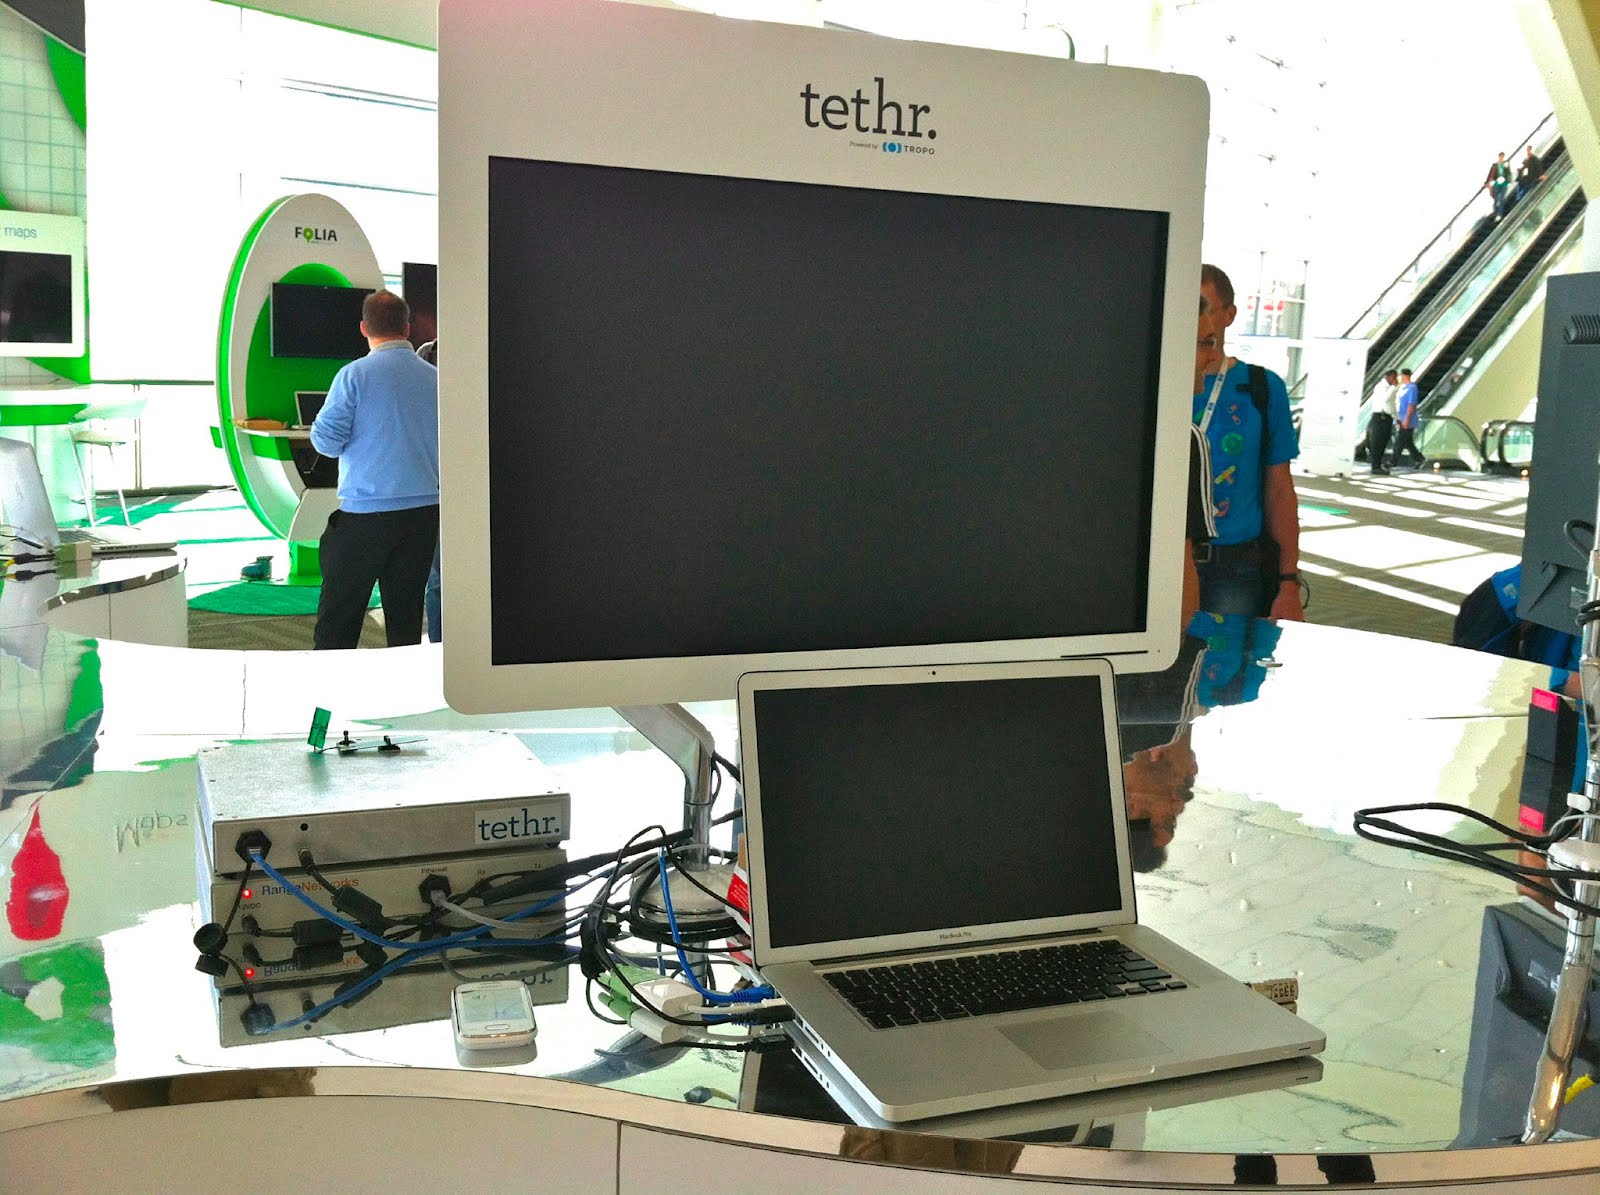 2012 年 Google I/O 大会上的 Tethr/Tropo 演示